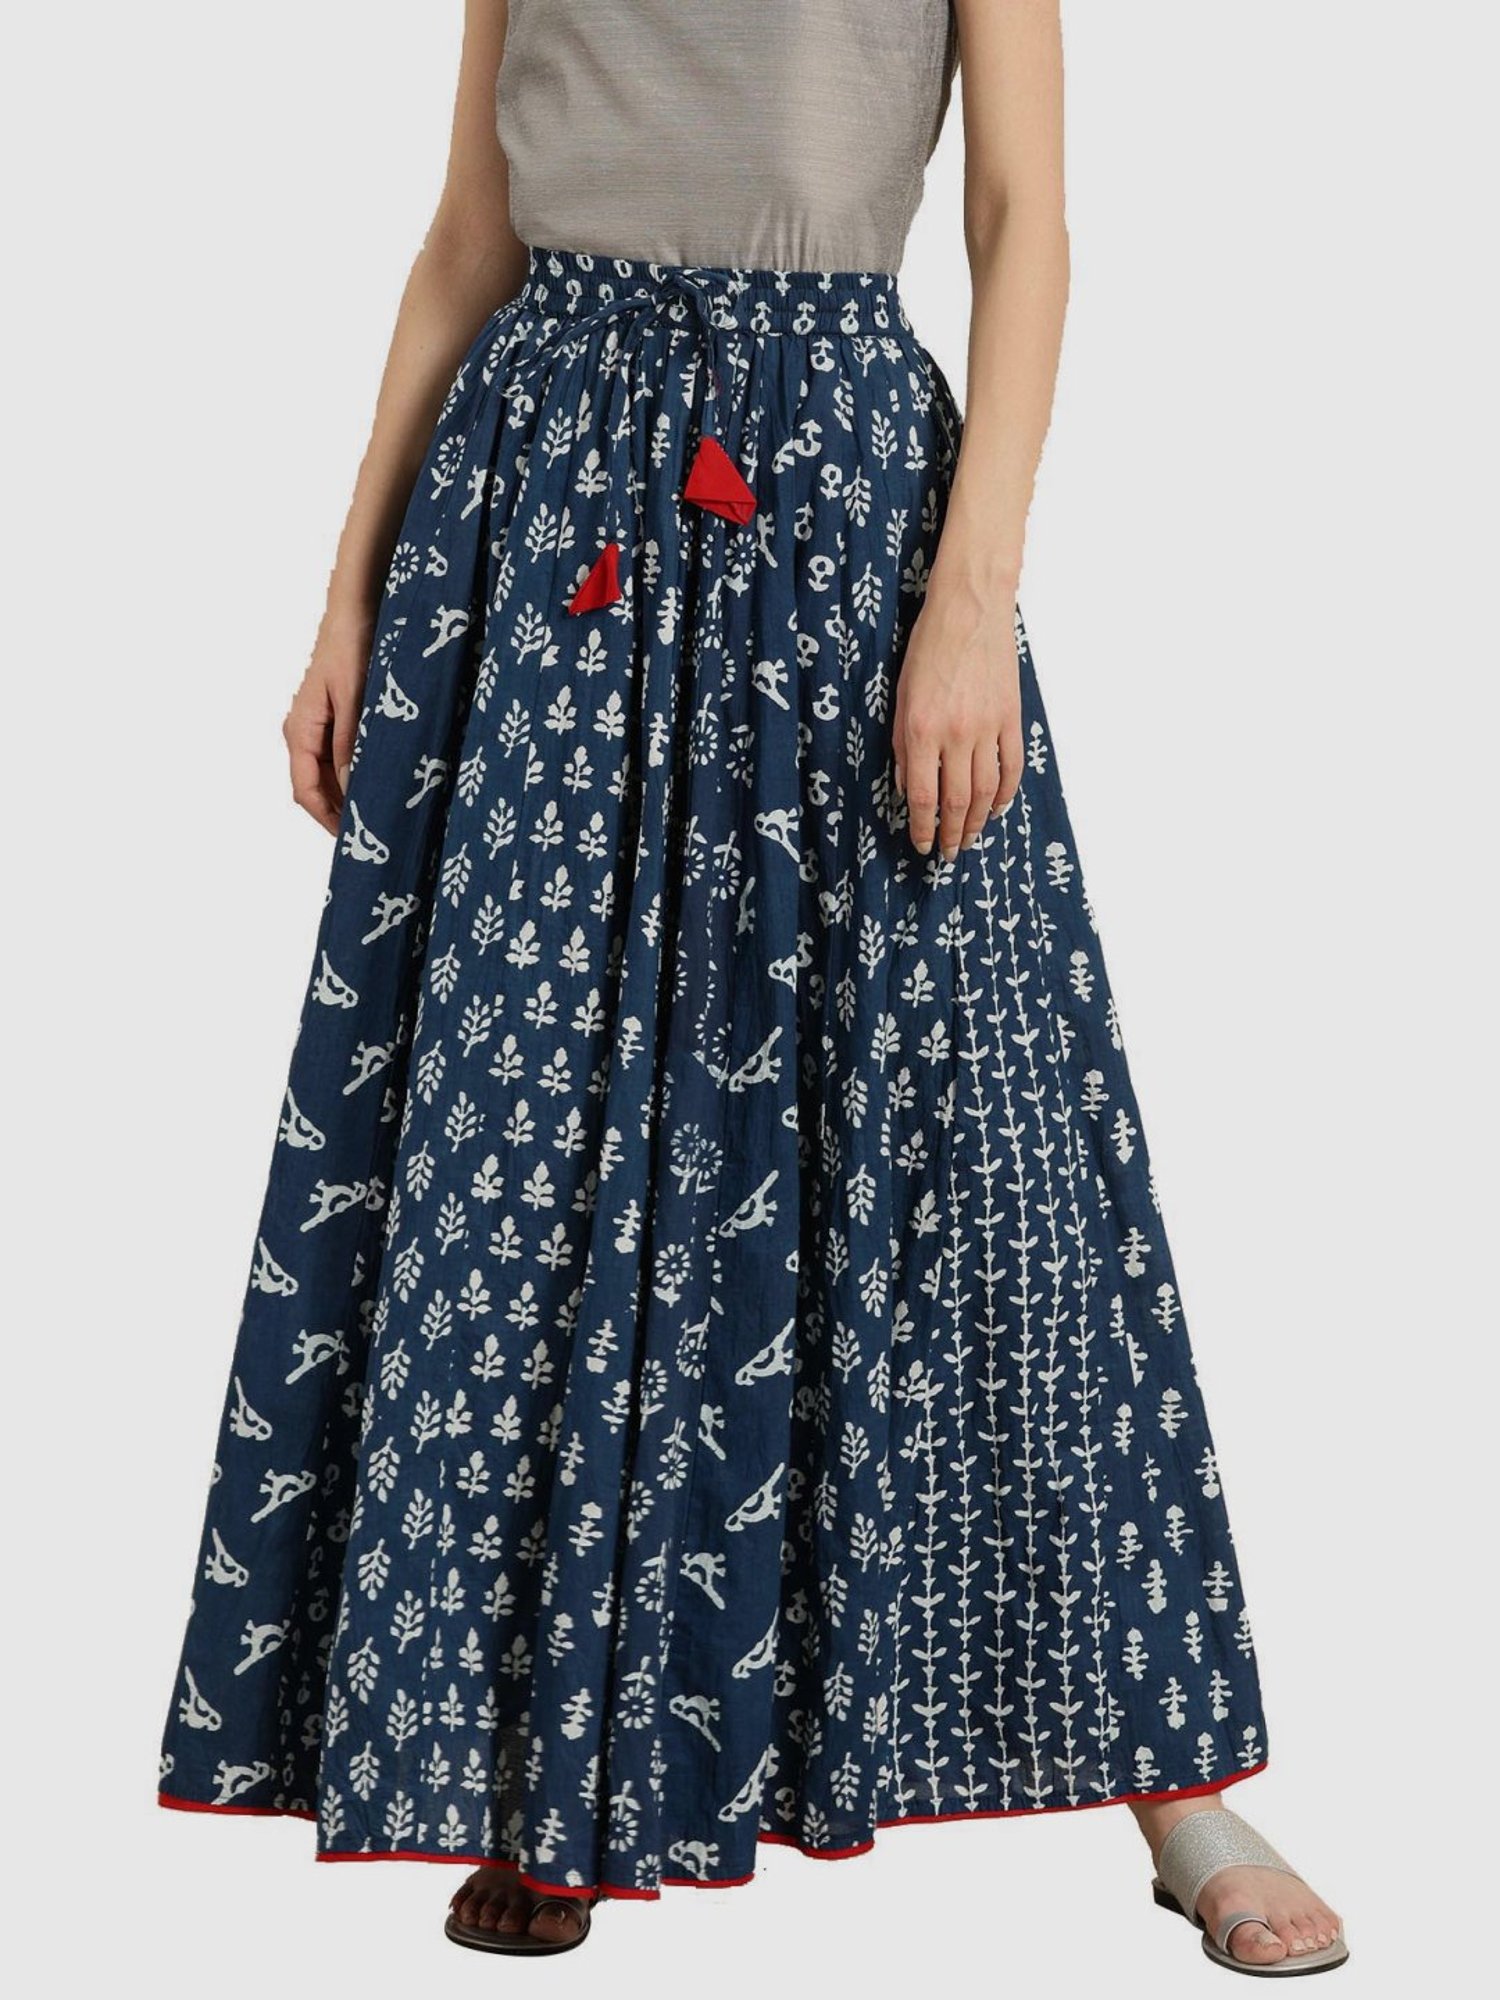 Shop Indigo Cotton Petticoat Collection Online at Soch India